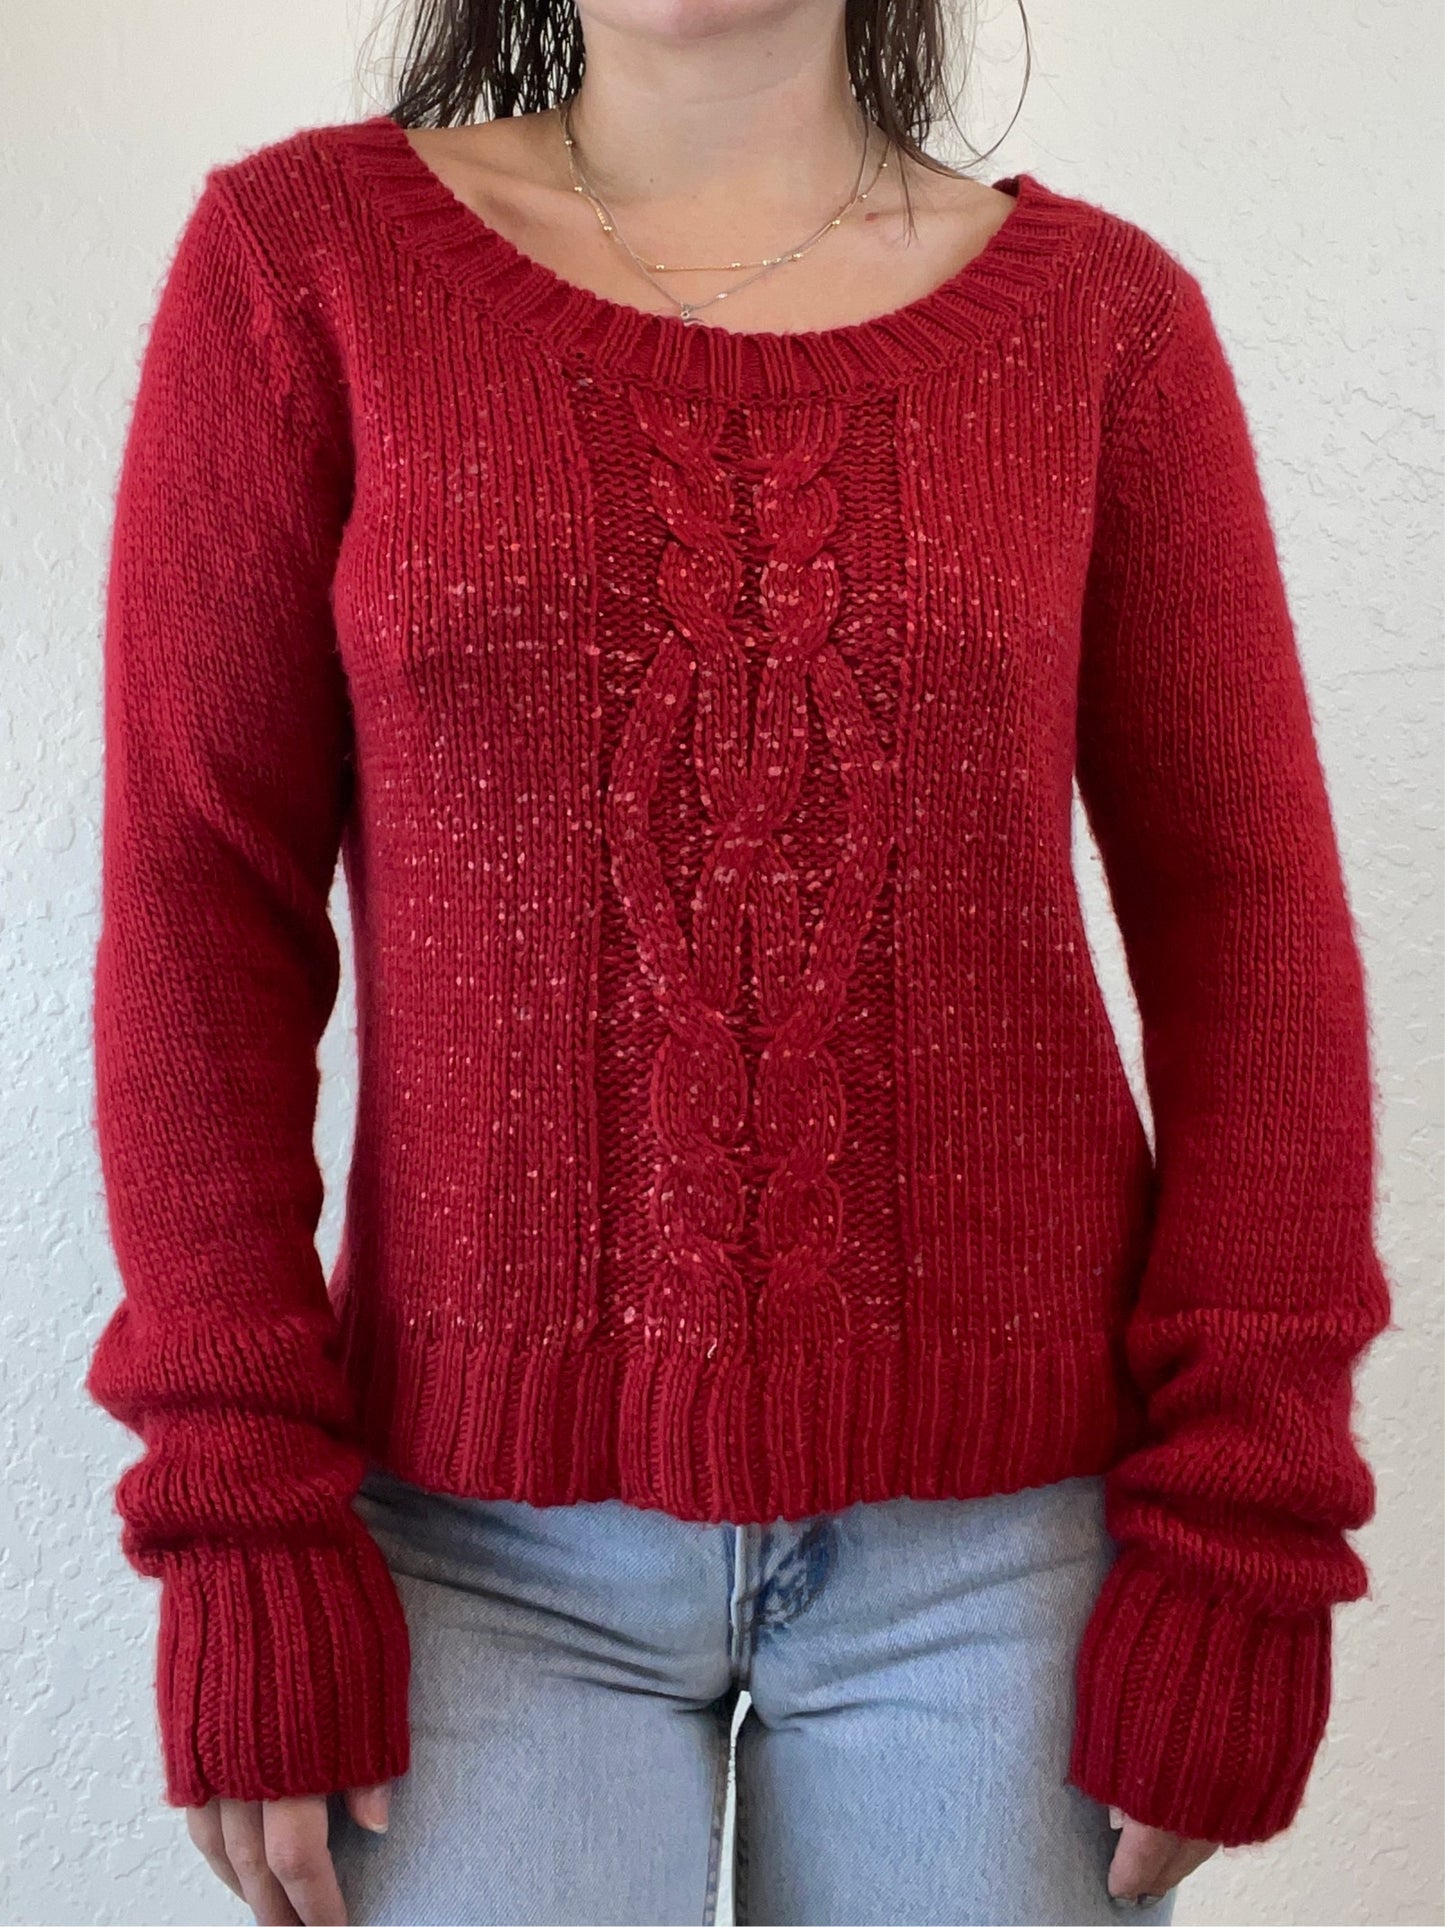 Red Mudd sweater